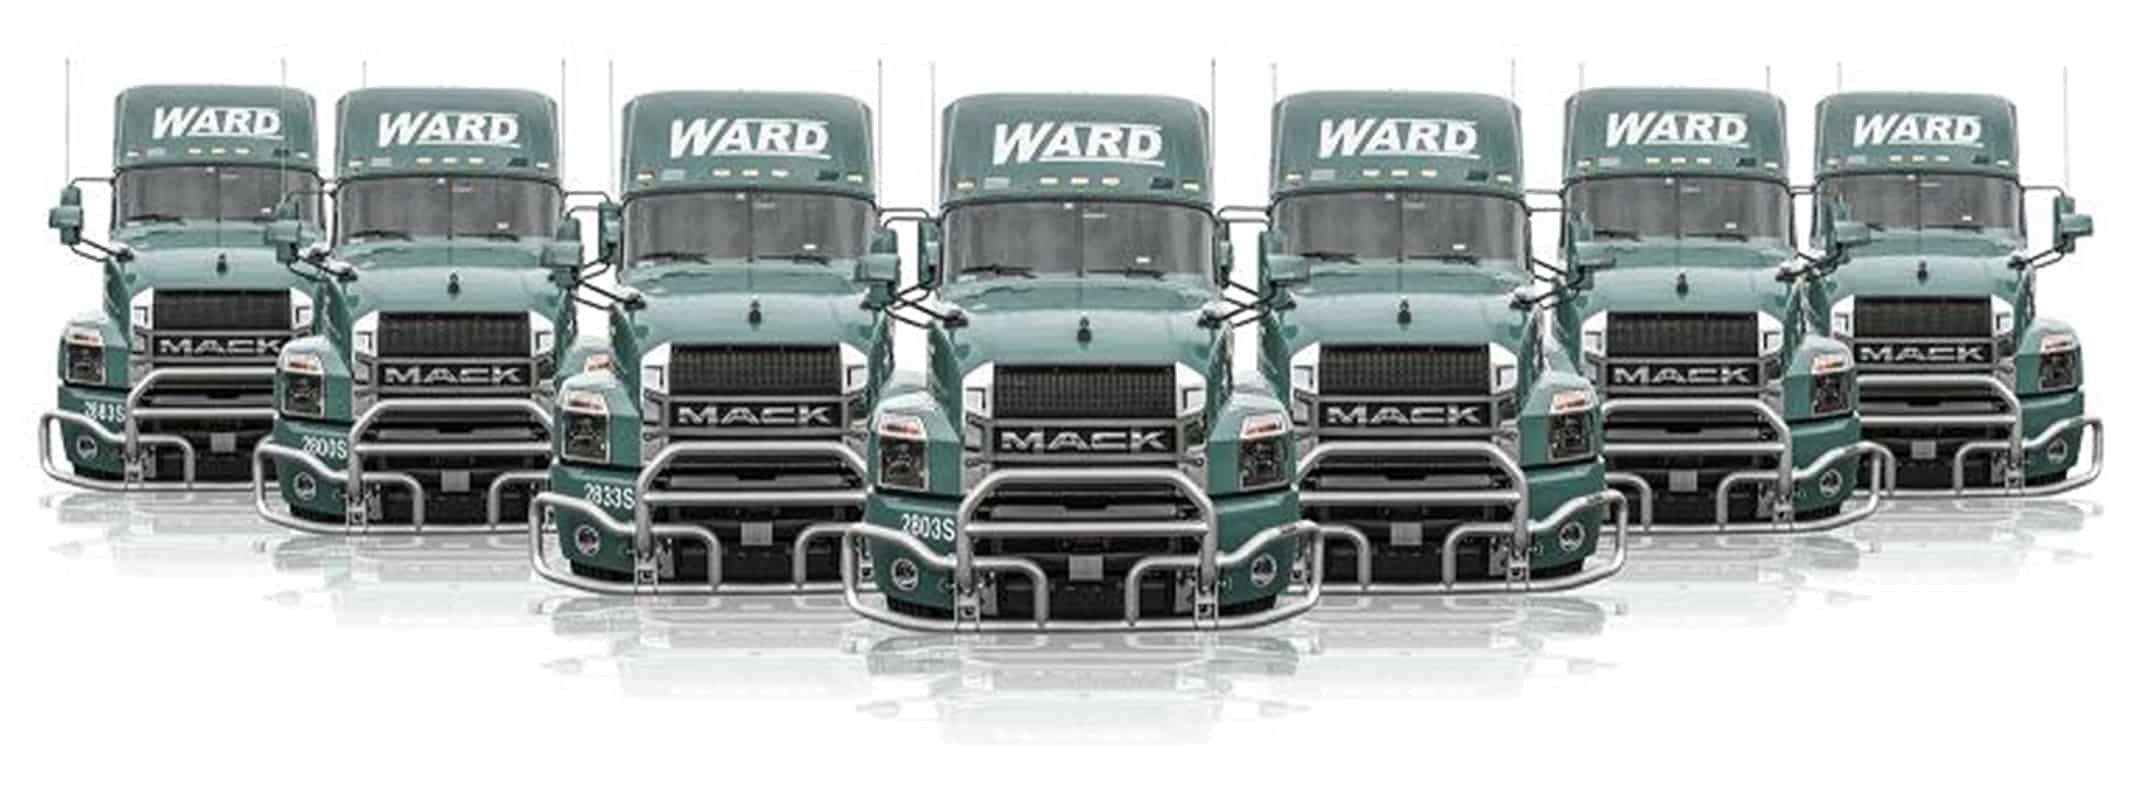 Ward Equipment: línea de remolques de tractores Mack con Ward en la parte superior